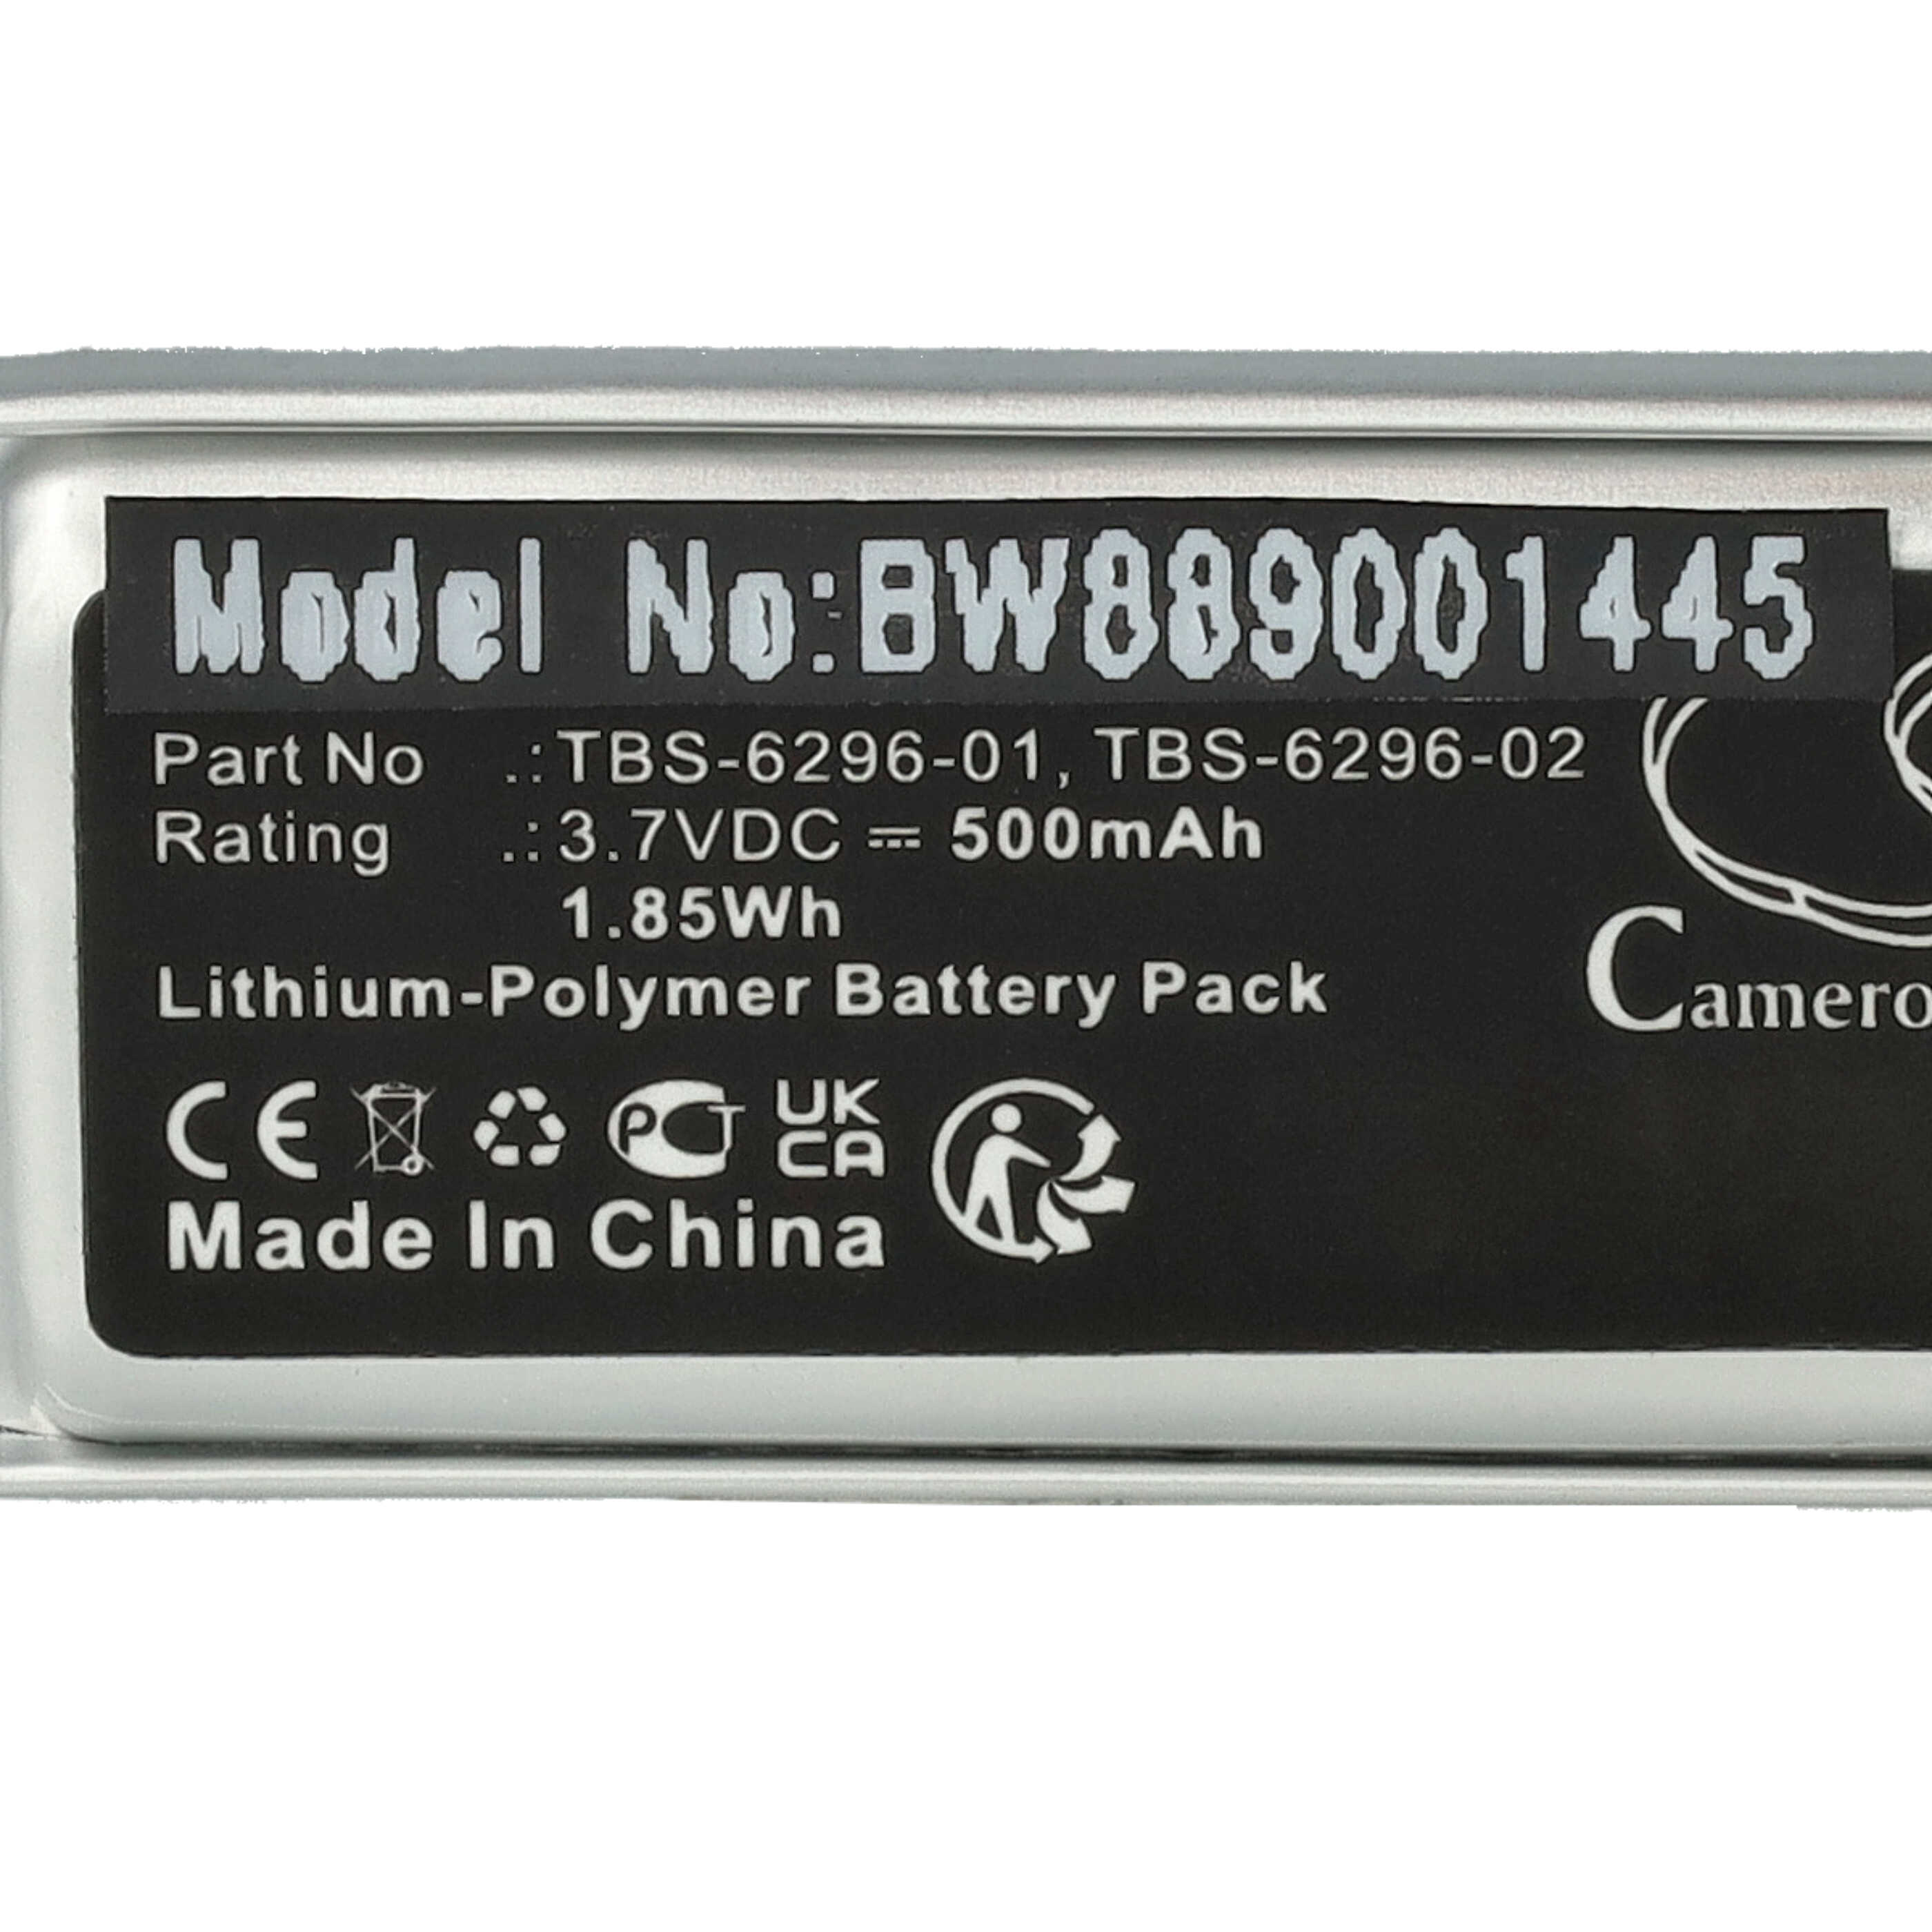 Wireless Headset Battery Replacement for Turtle Beach TBS-6296-01, TBS-6296-02 - 500mAh 3.7V Li-polymer